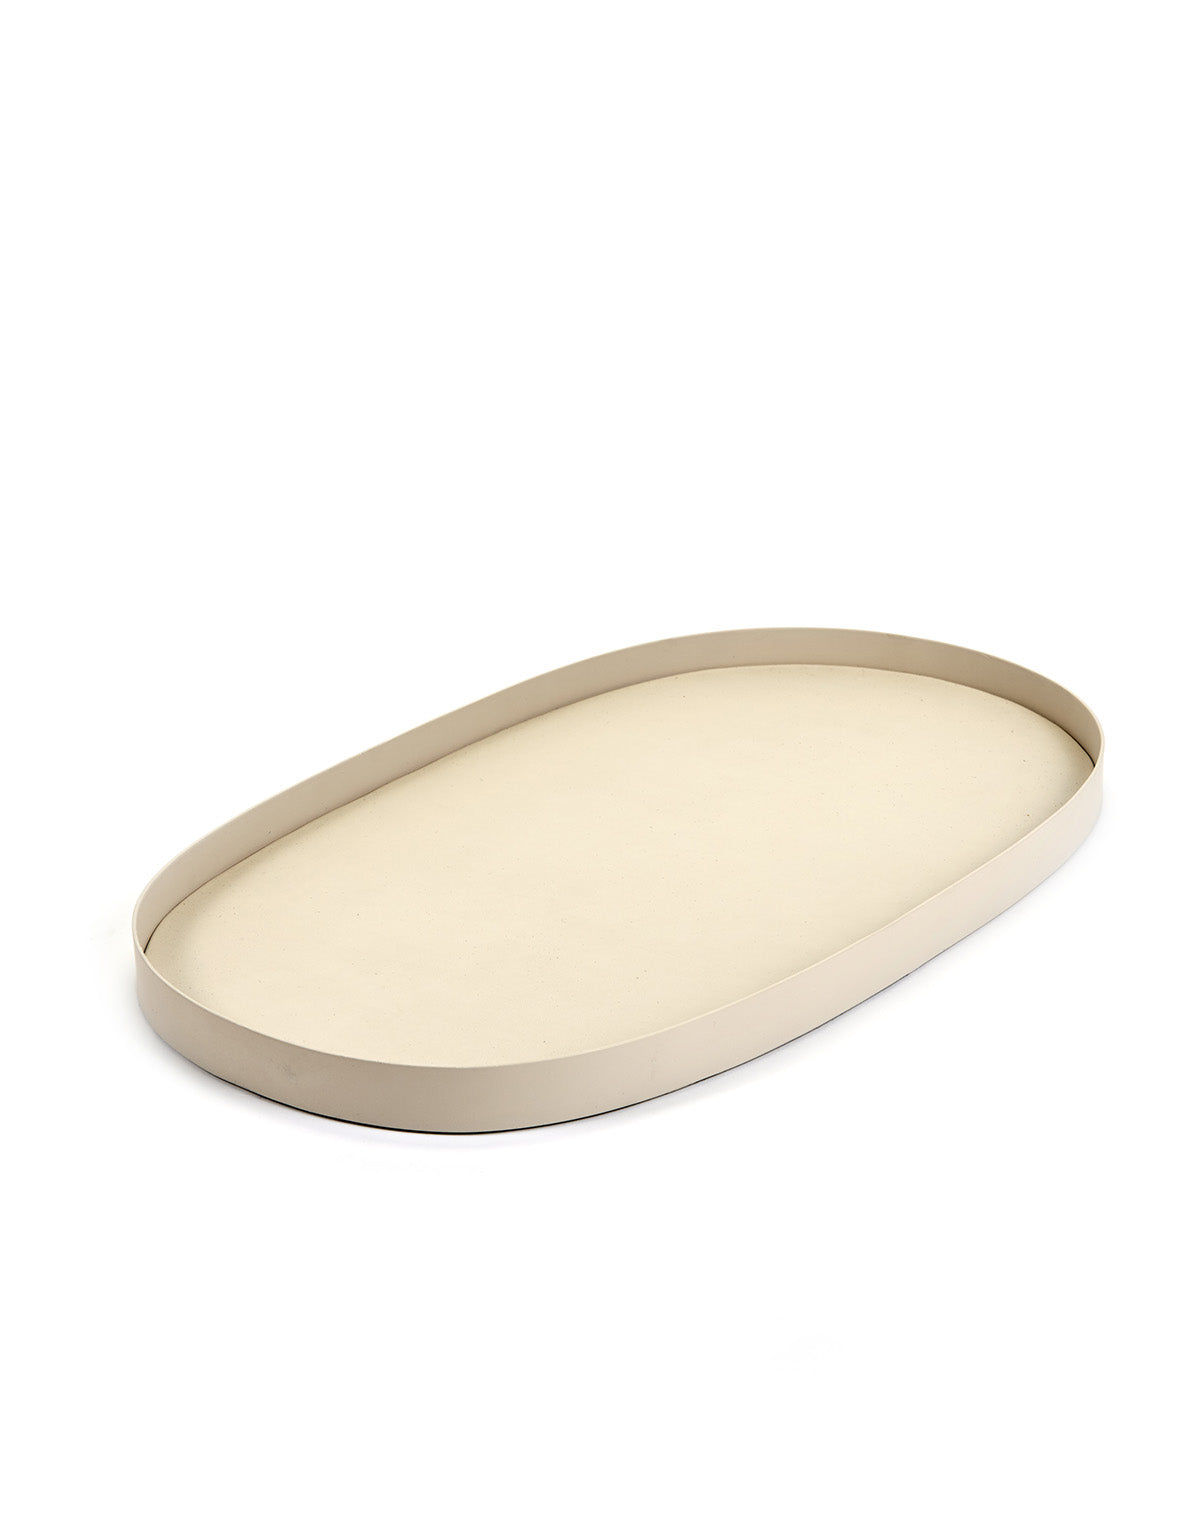 Tray Vinyl Oval Cream